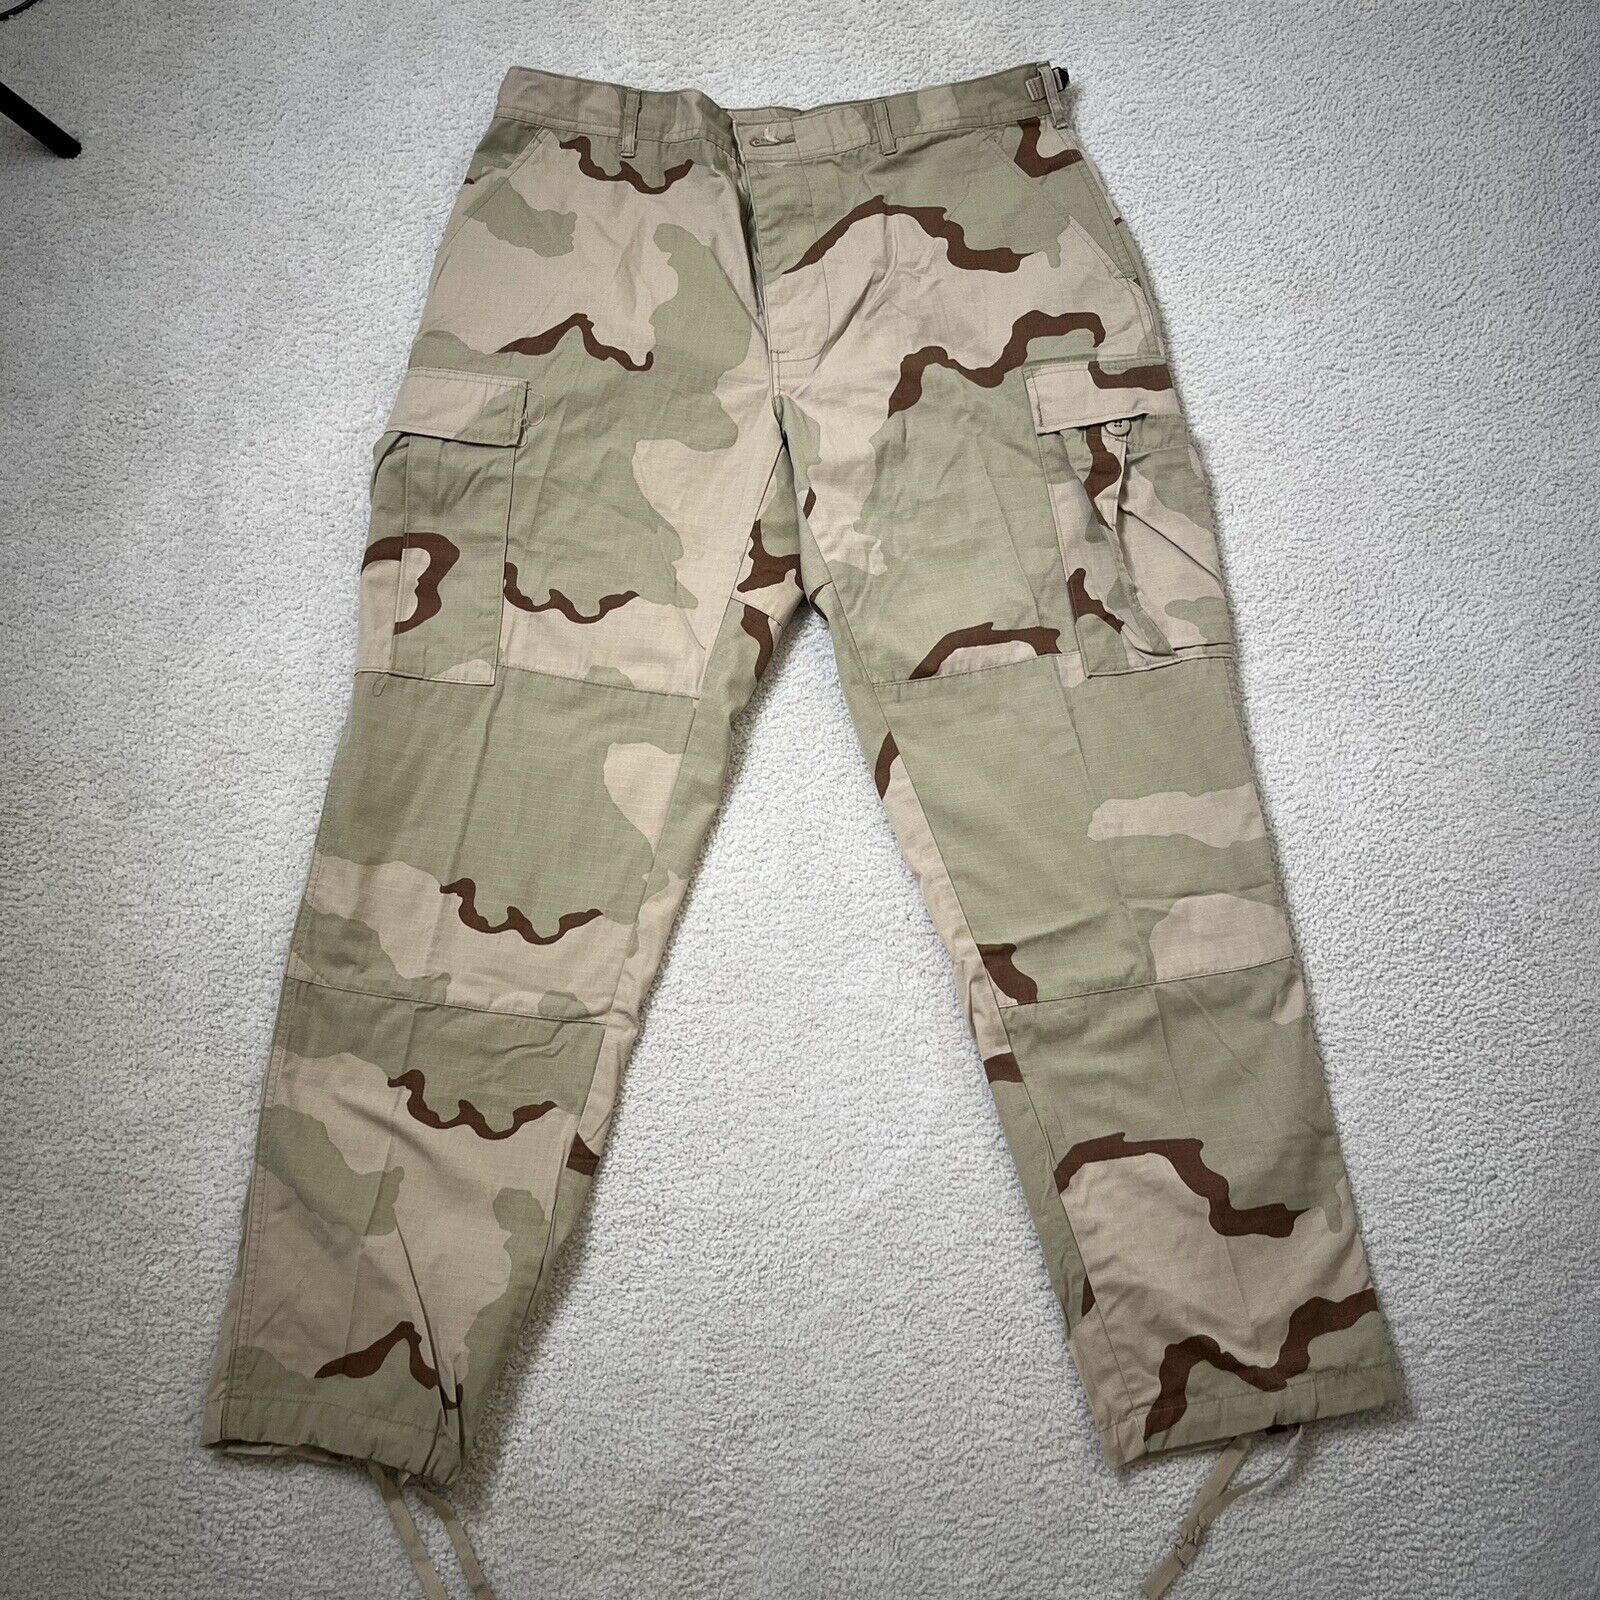 U.S. Navy Combat Desert Camouflage Trousers Pants Size Large Regular